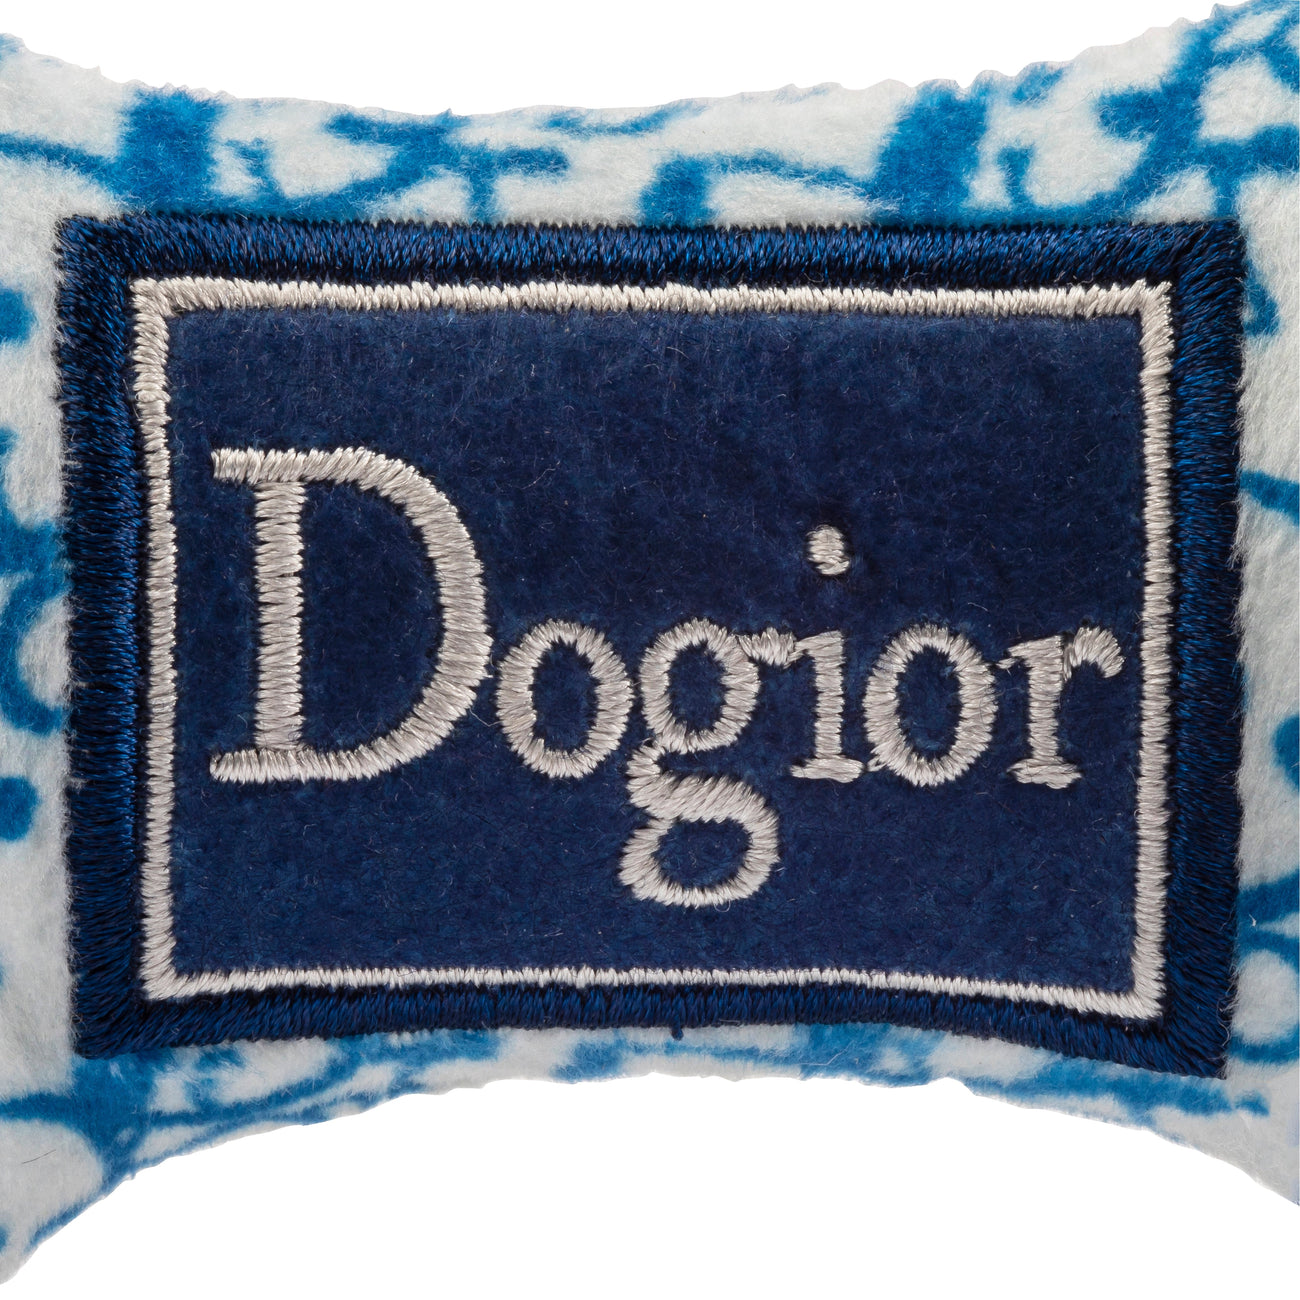 Dogior Bone Dog Toy